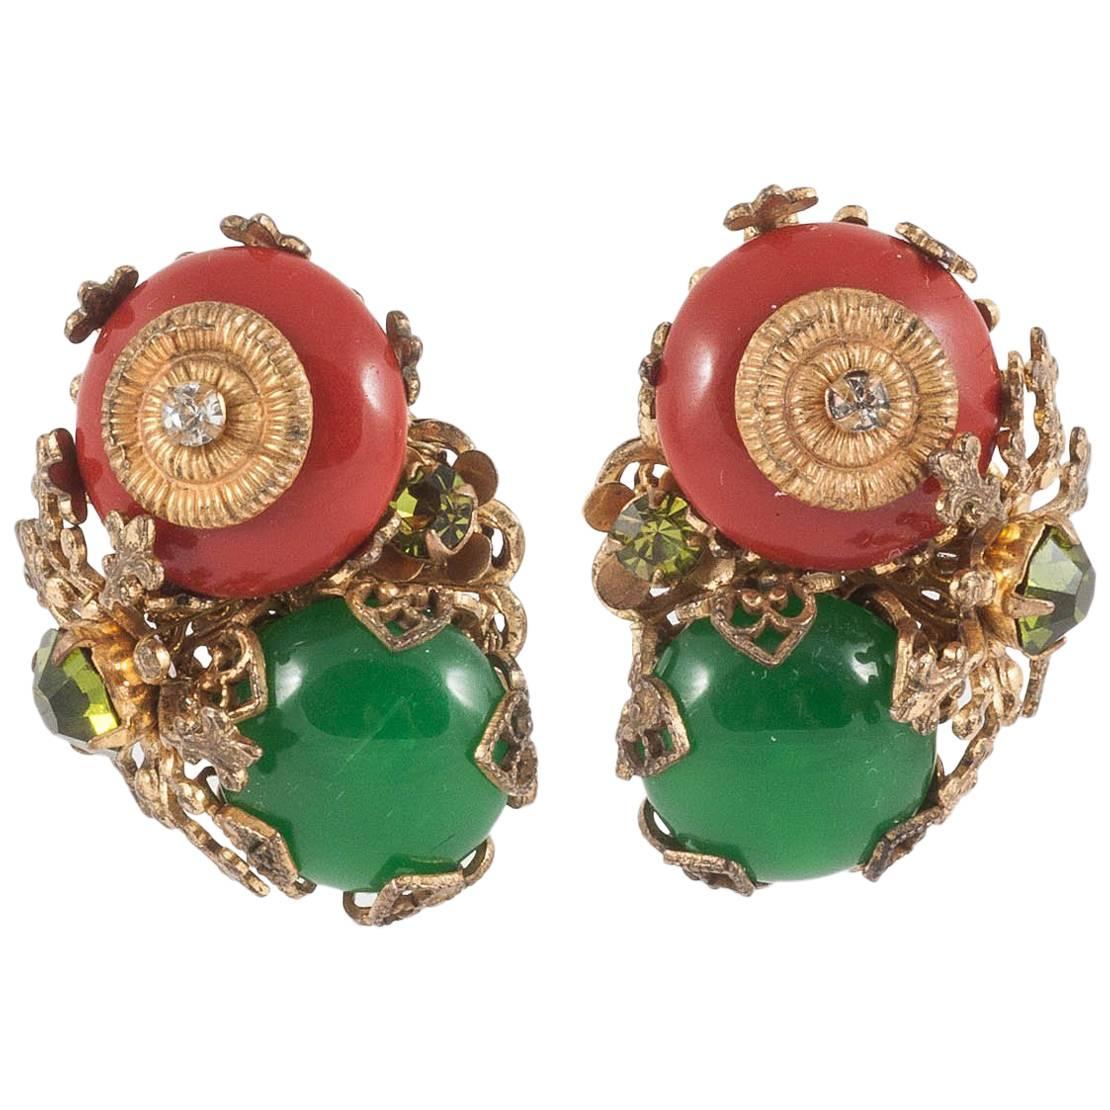 Cornelian red and green glass, , gilt metal earrings, Miriam Haskell, USA, 1950s